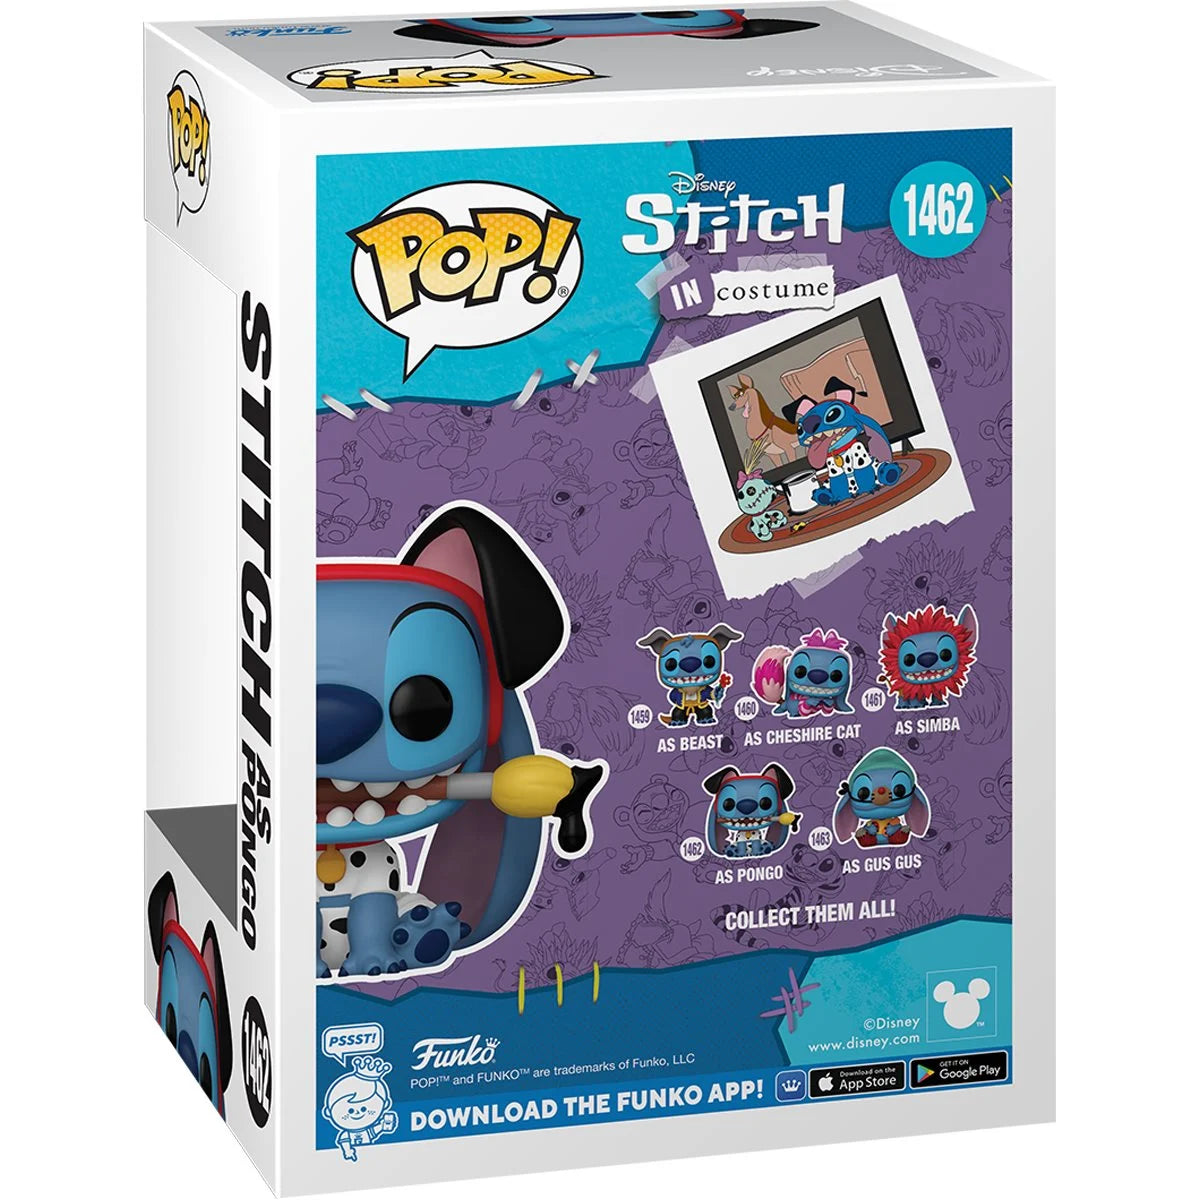 Funko Pop! Disney Lilo & Stitch Costume Stitch as Pongo Vinyl Figure #1462